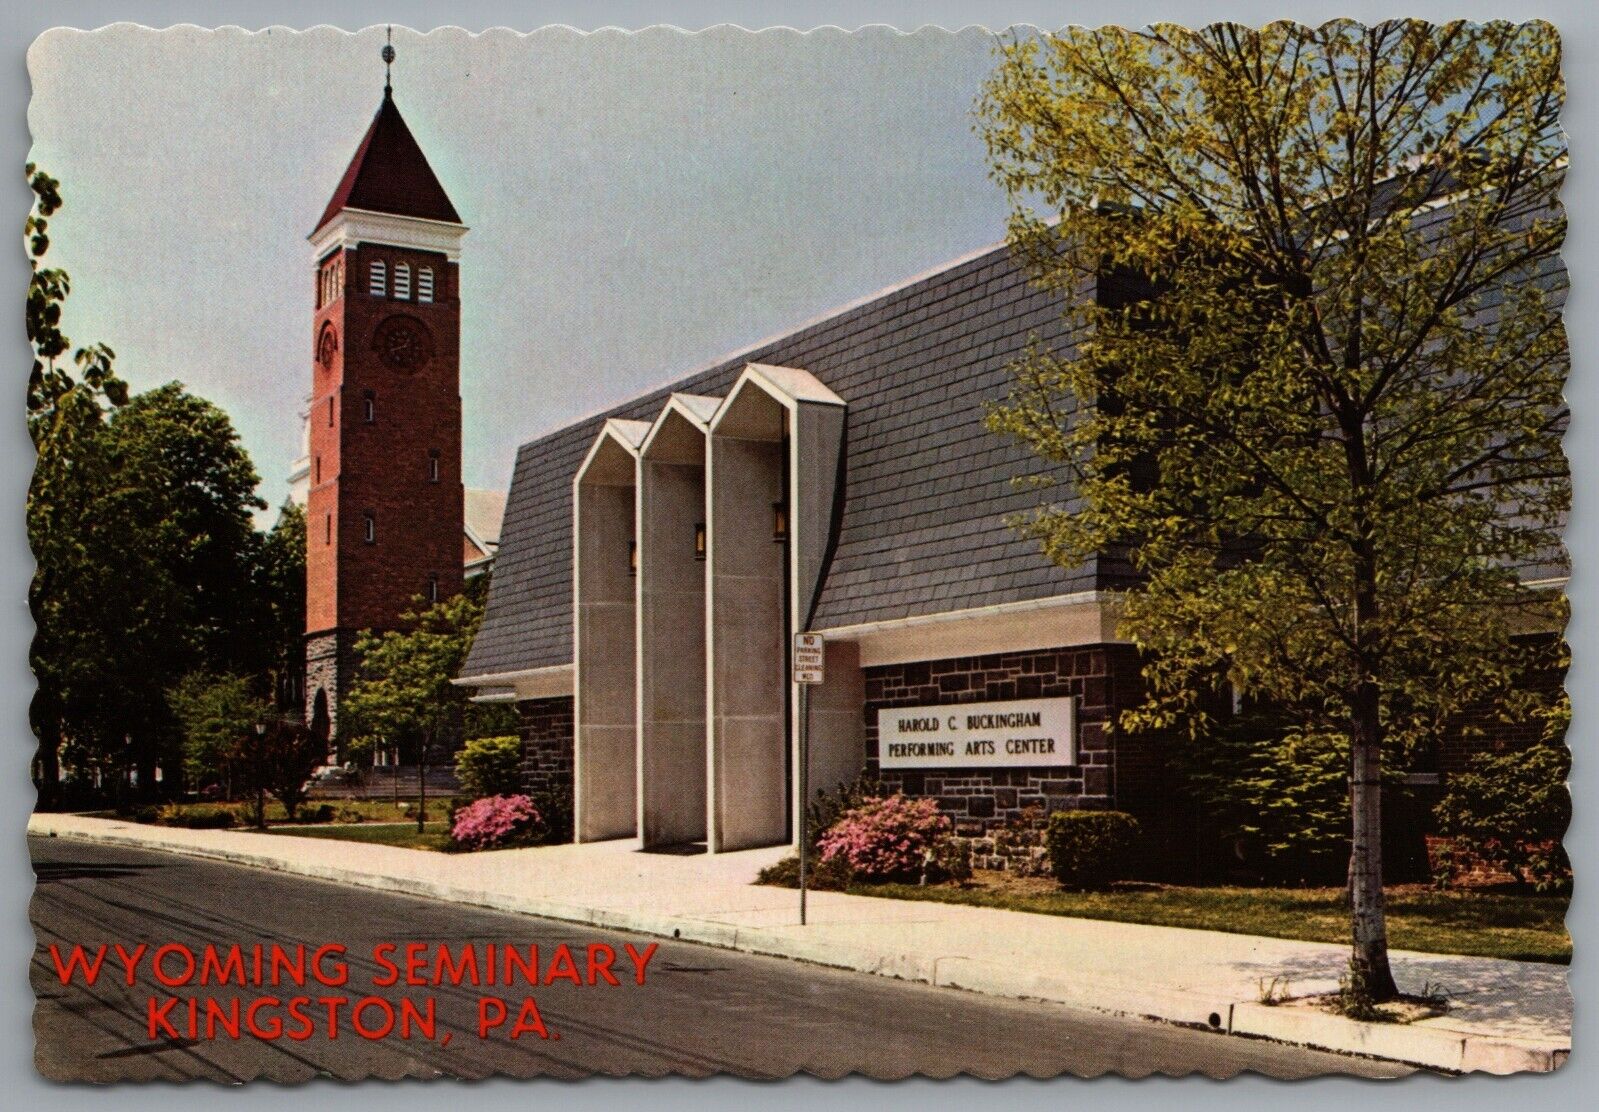 Kingston PA Wyoming Seminary Harold C. Buckingham Performing Arts Center c1979